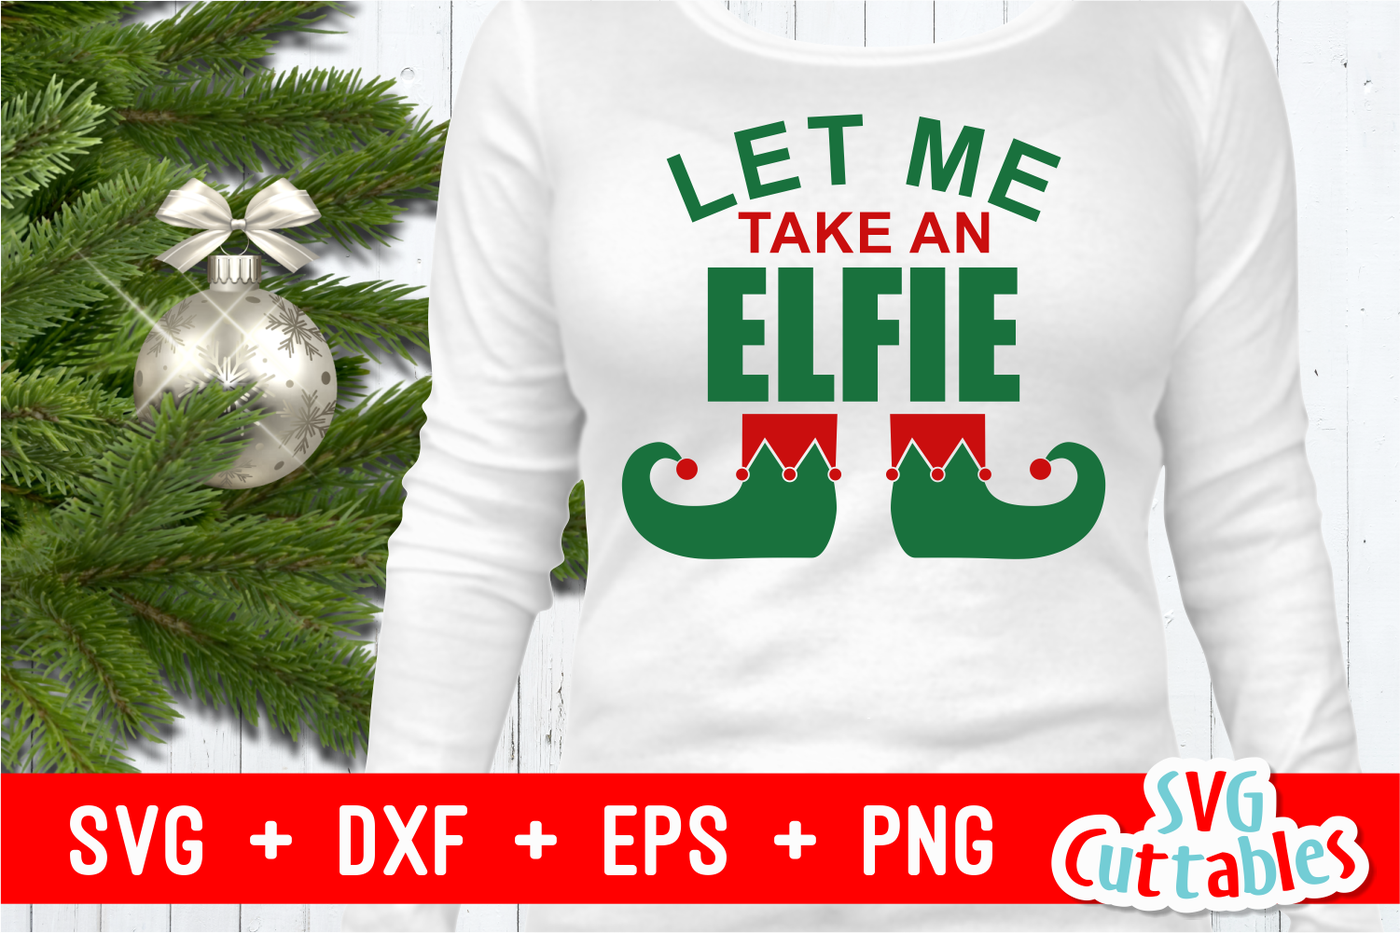 Let me take an elfie